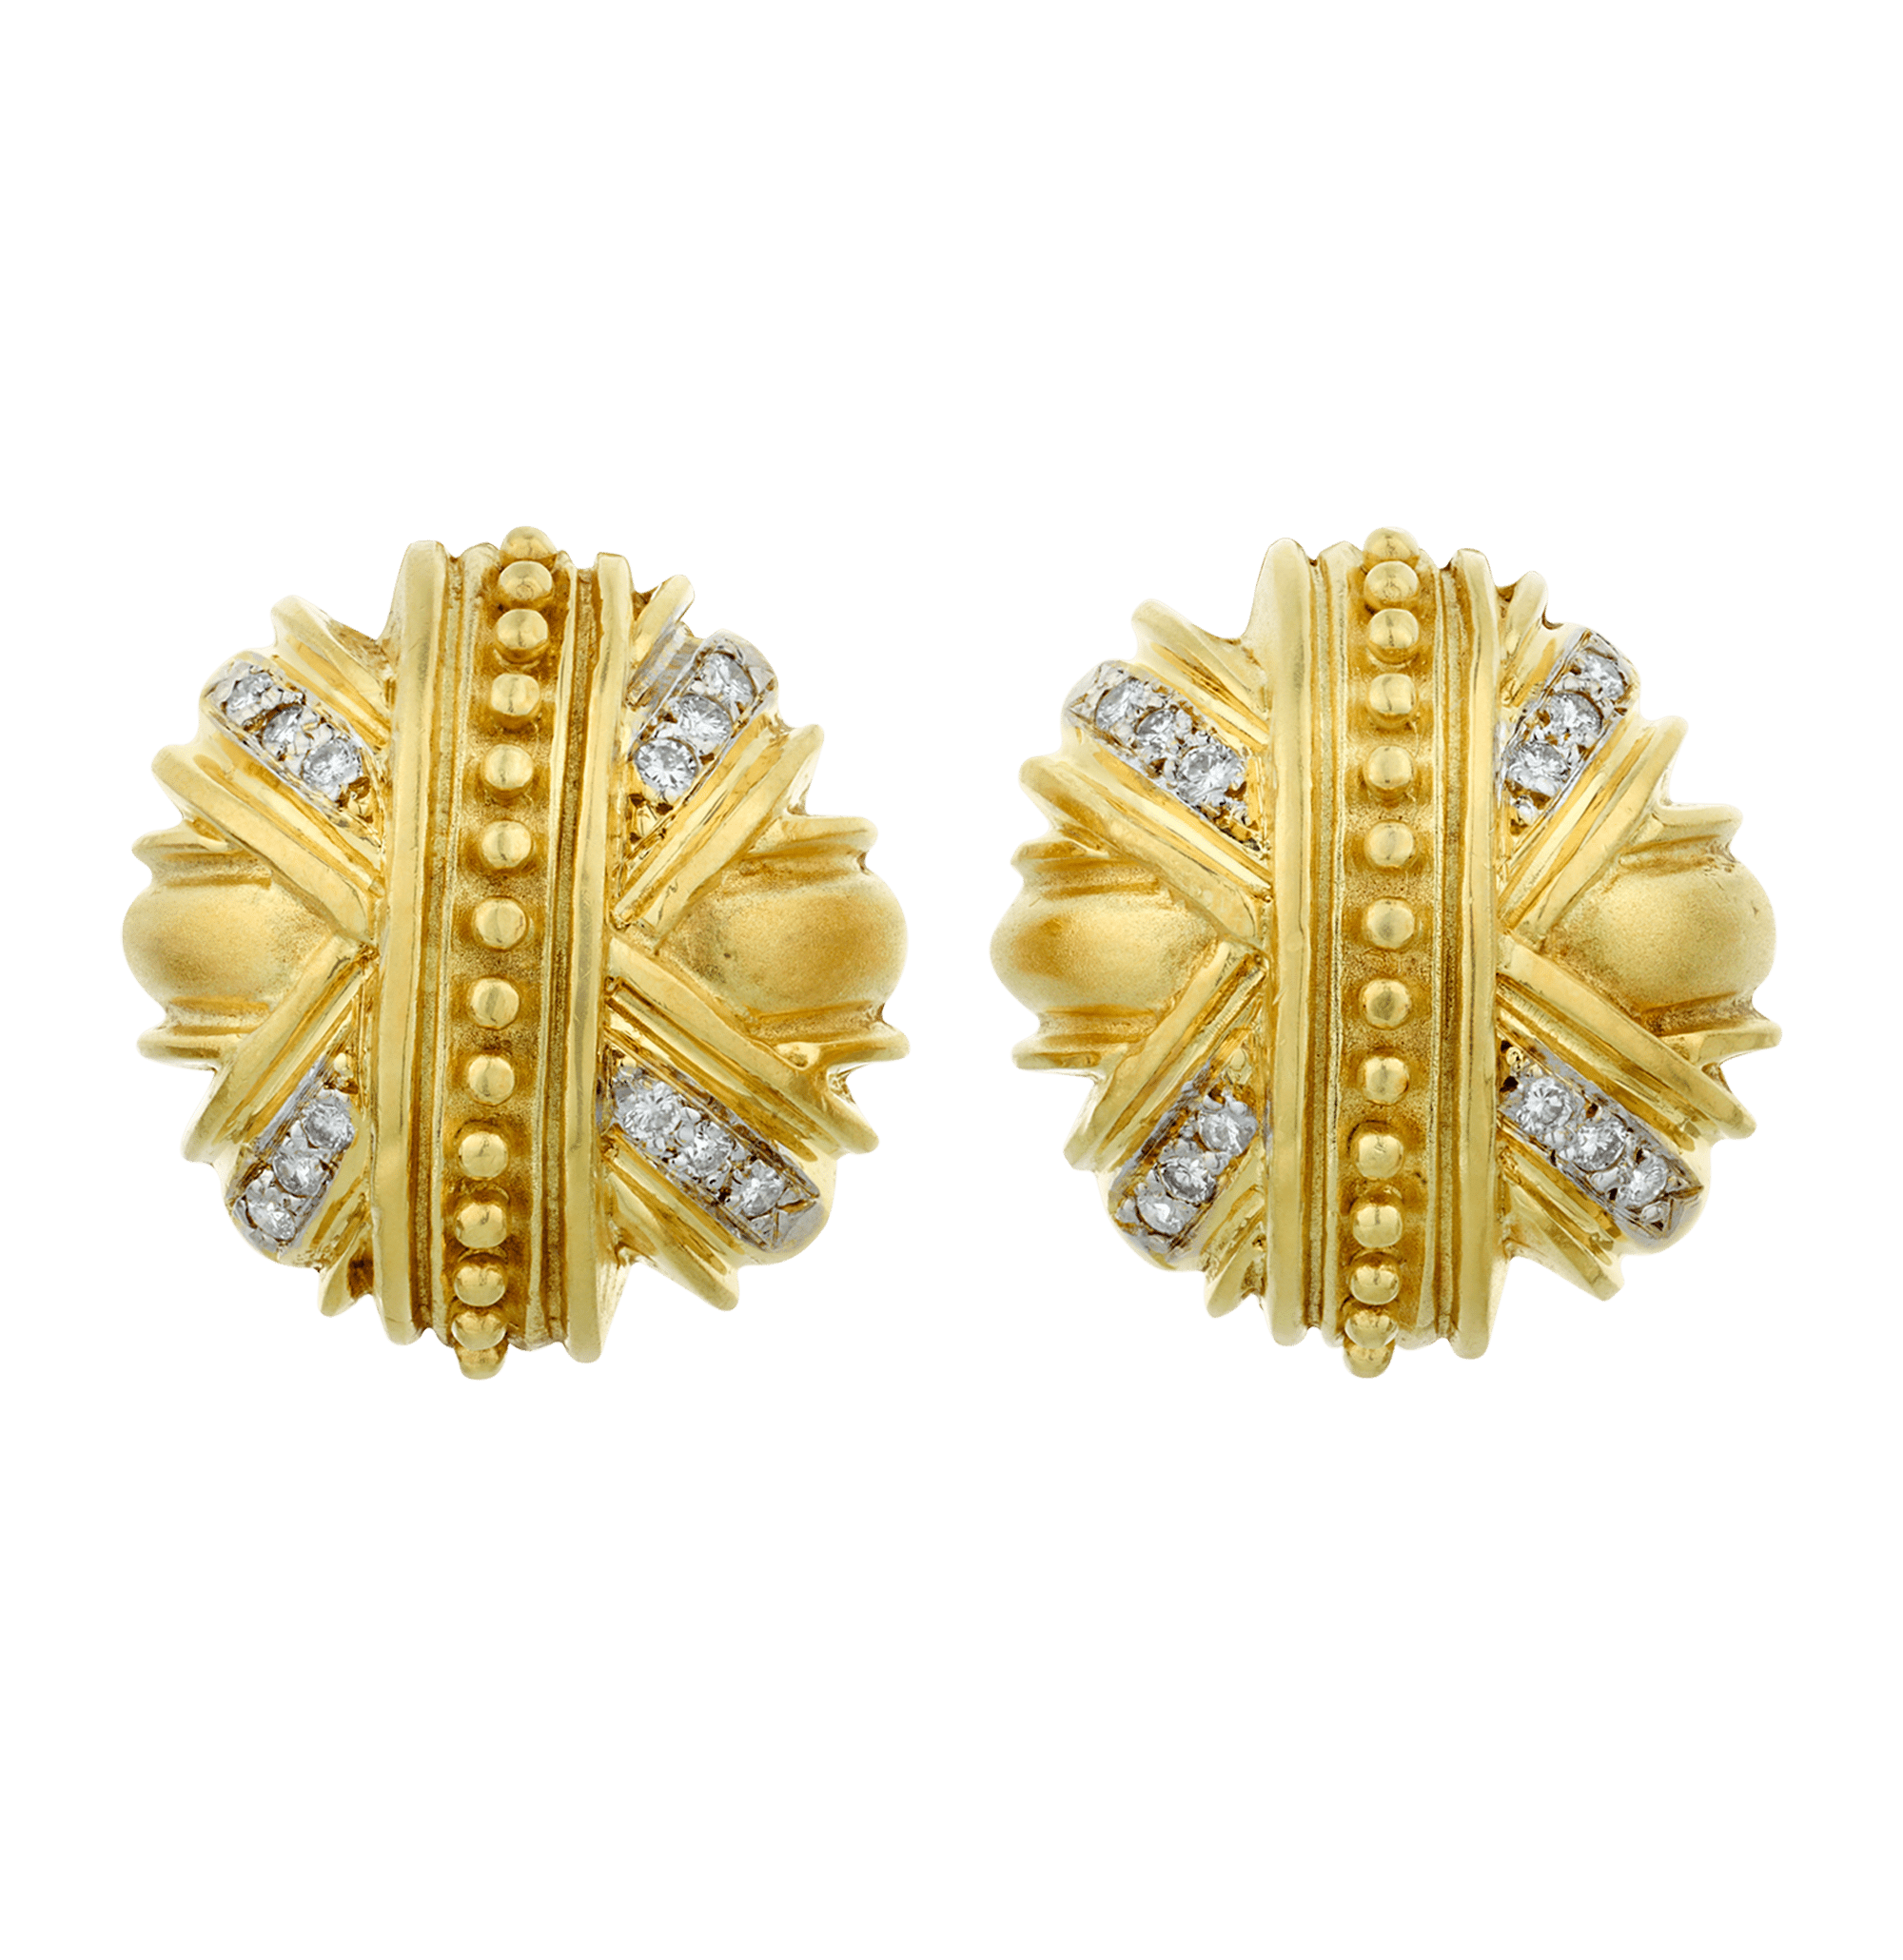 Geometric 18k Yellow Gold and Diamond Earrings